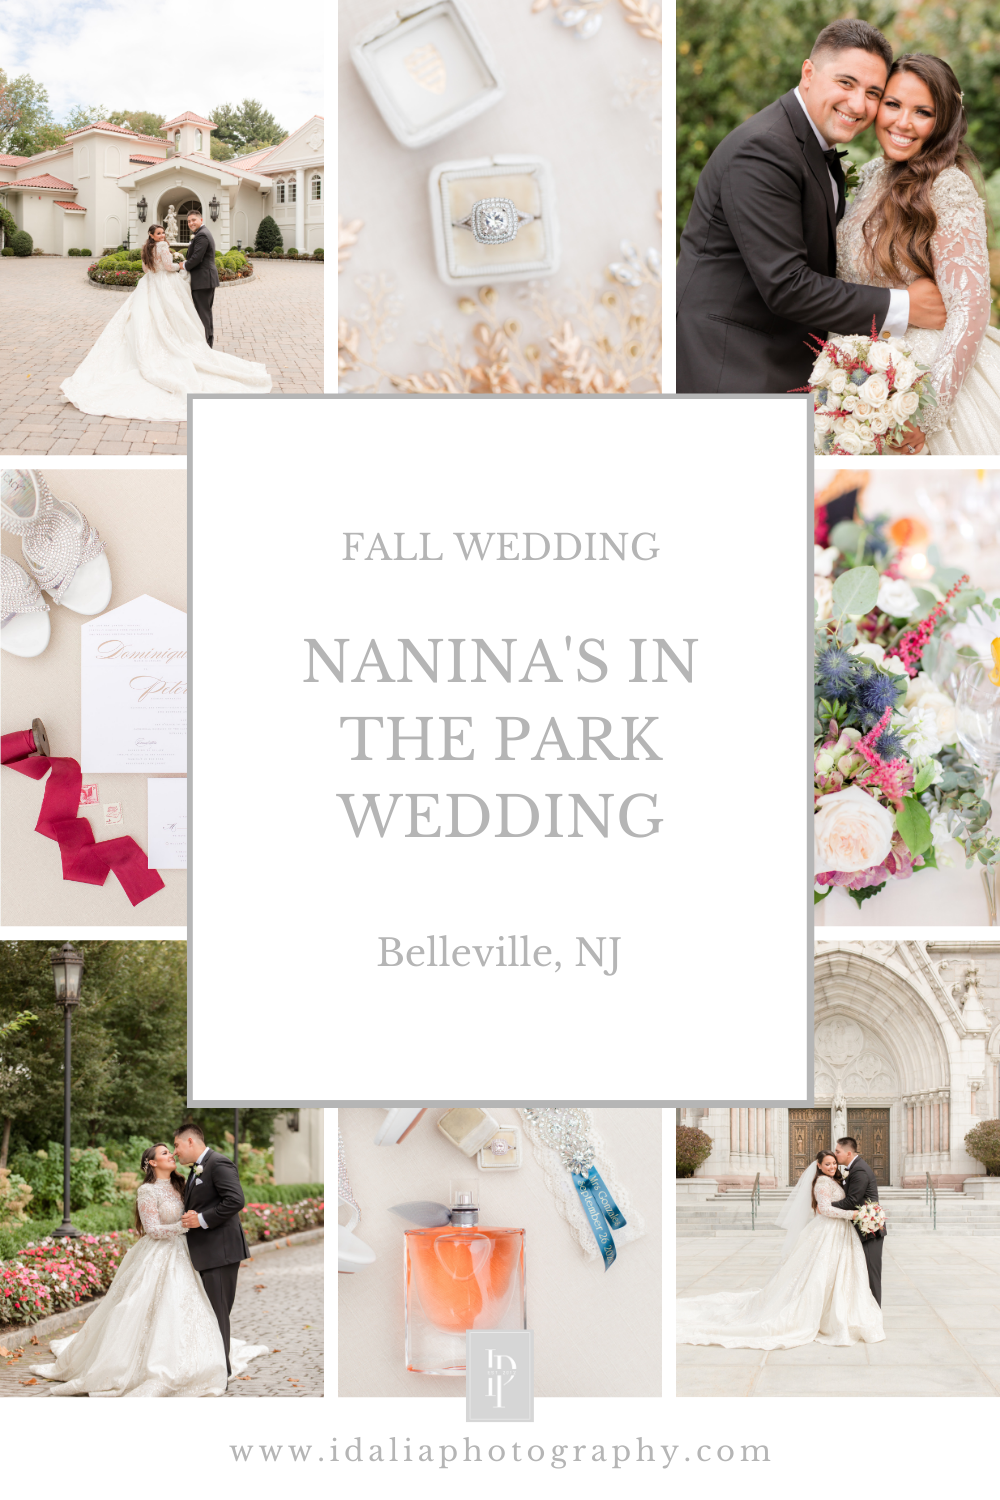 Fall wedding at Nanina's in the Park